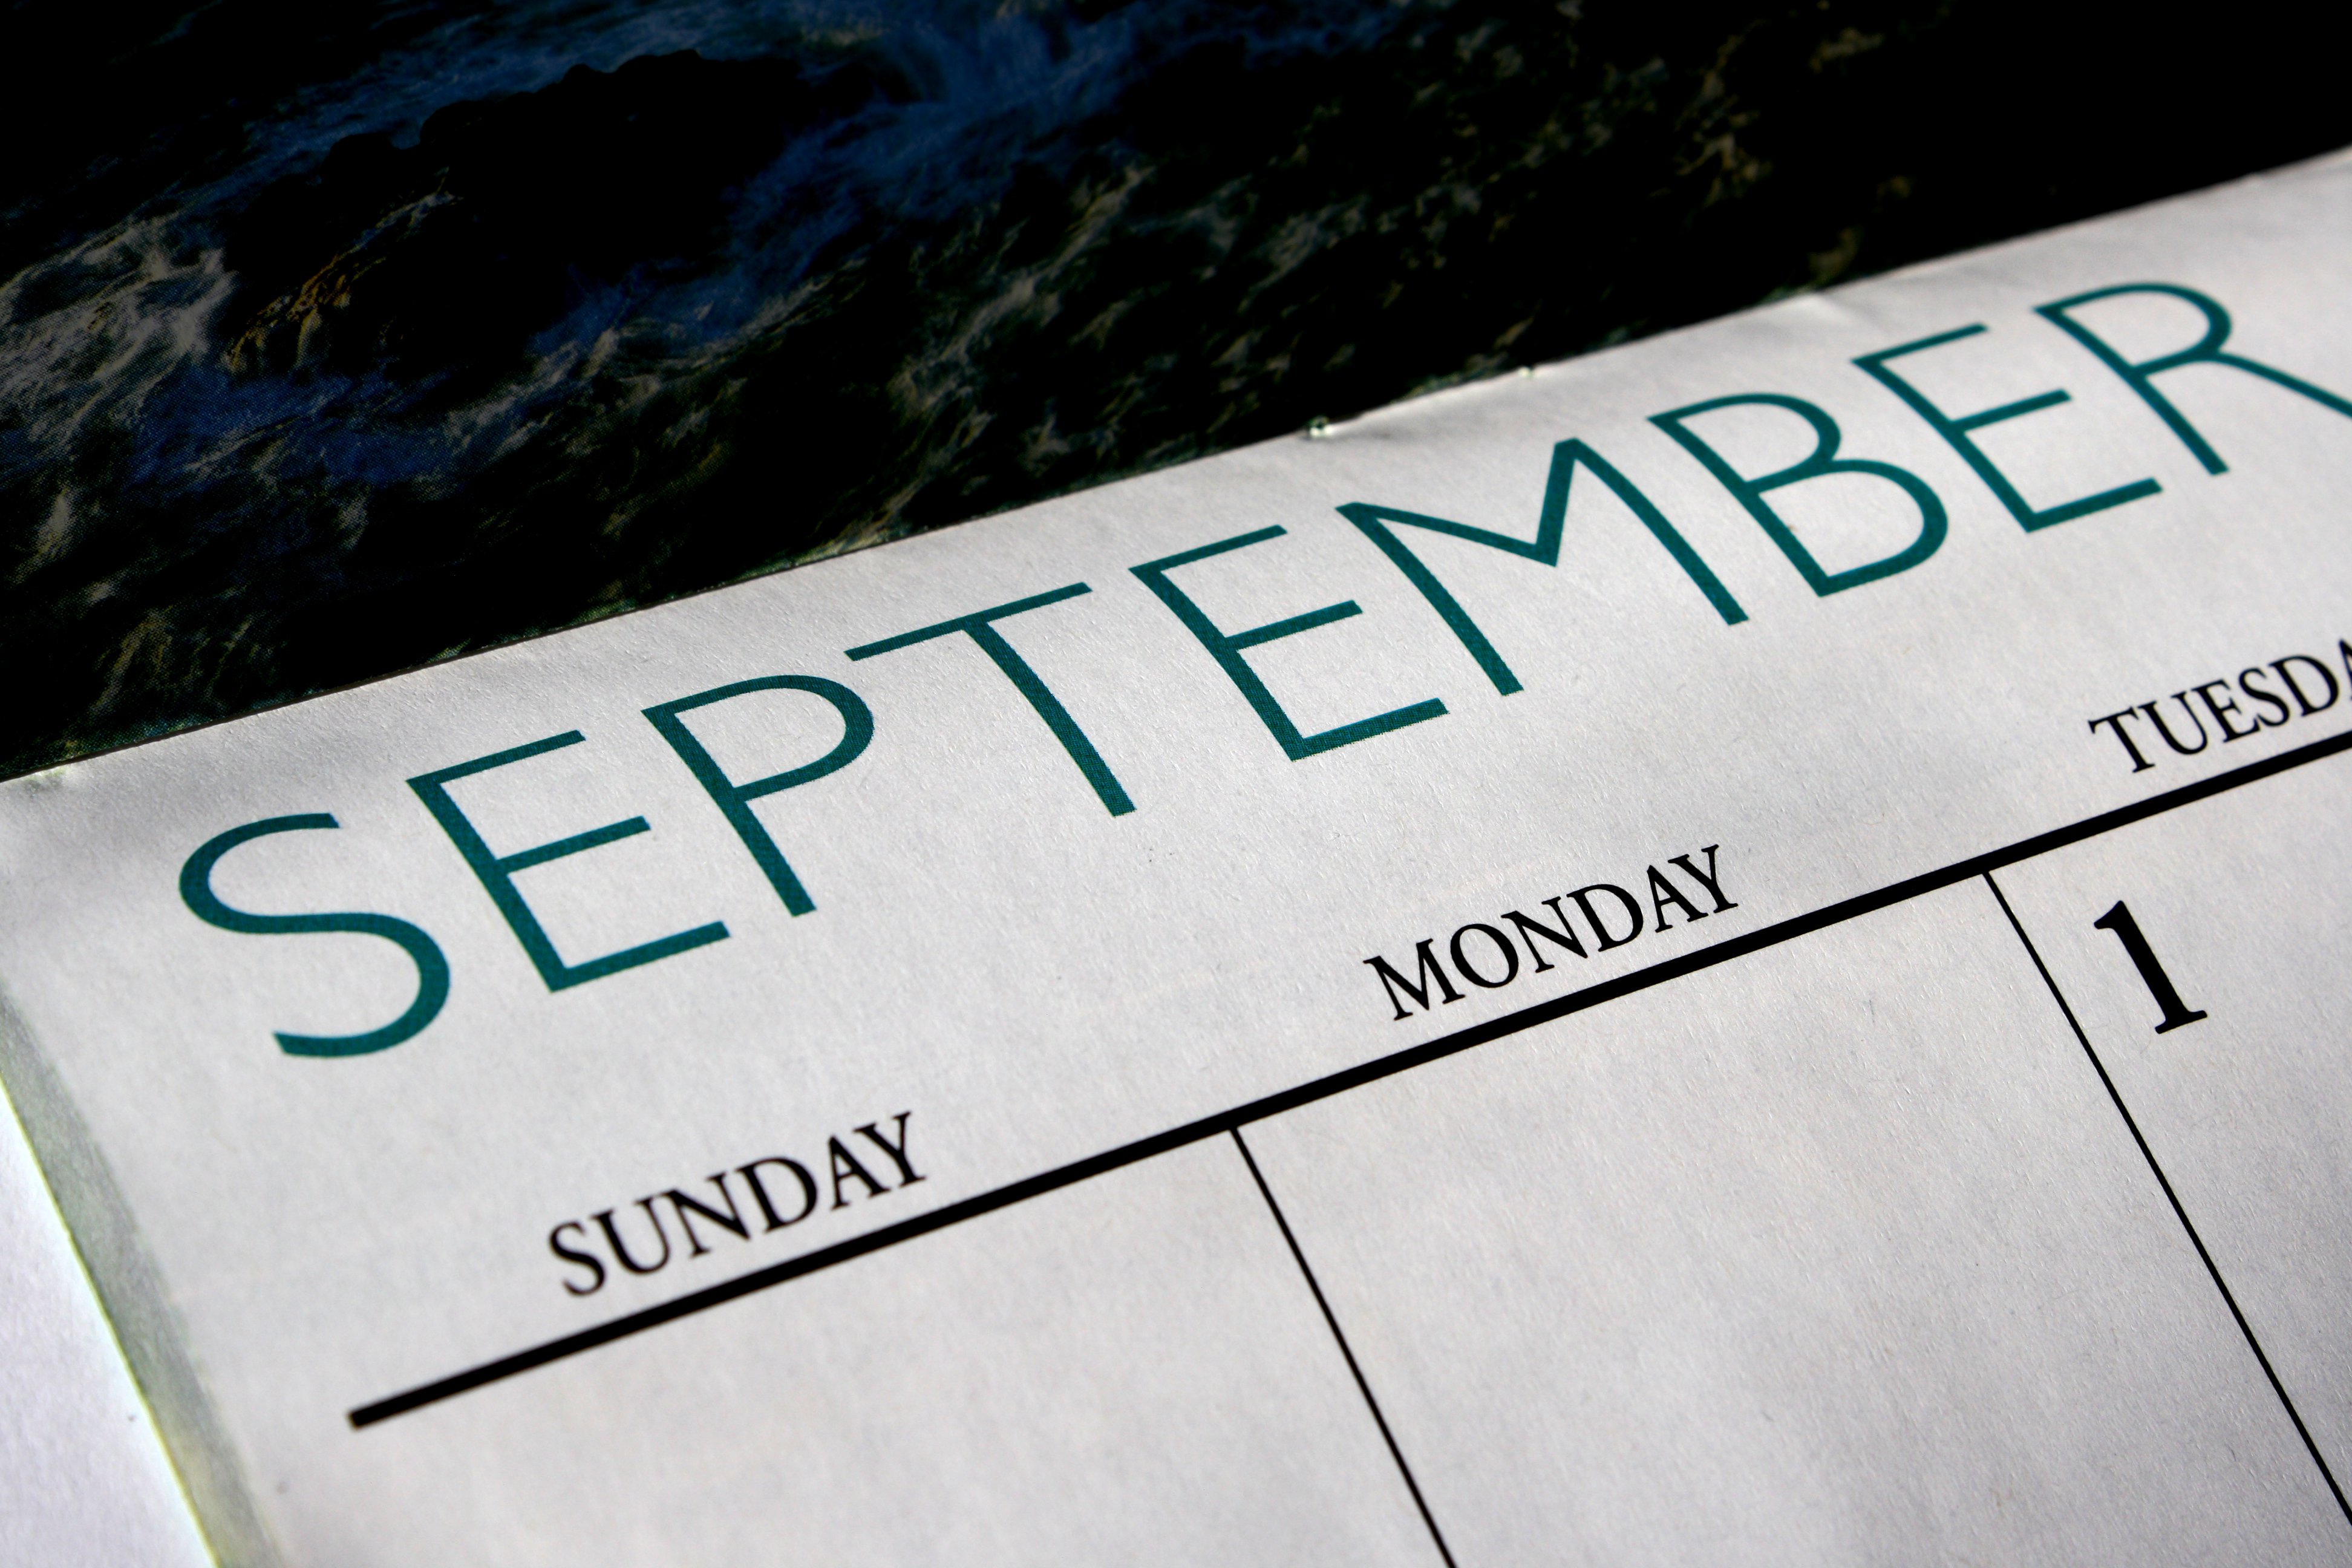 September-calendar